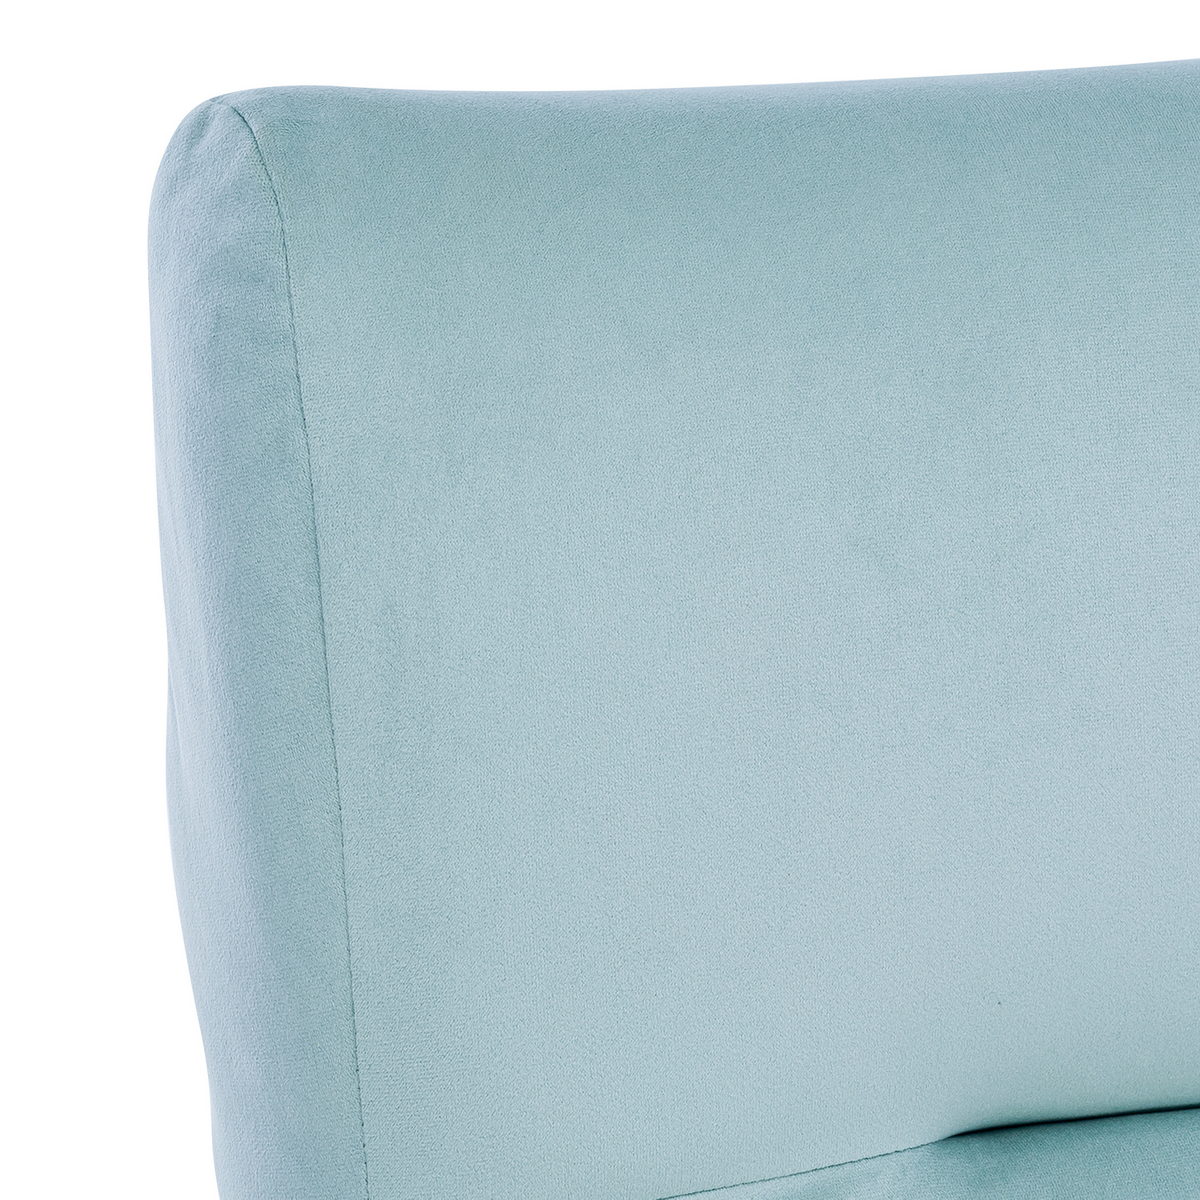 Кресло-качалка Leset Милано (Импэкс). Цвет каркаса: Венге текстура; Цвет обивки: V14 бирюзовый